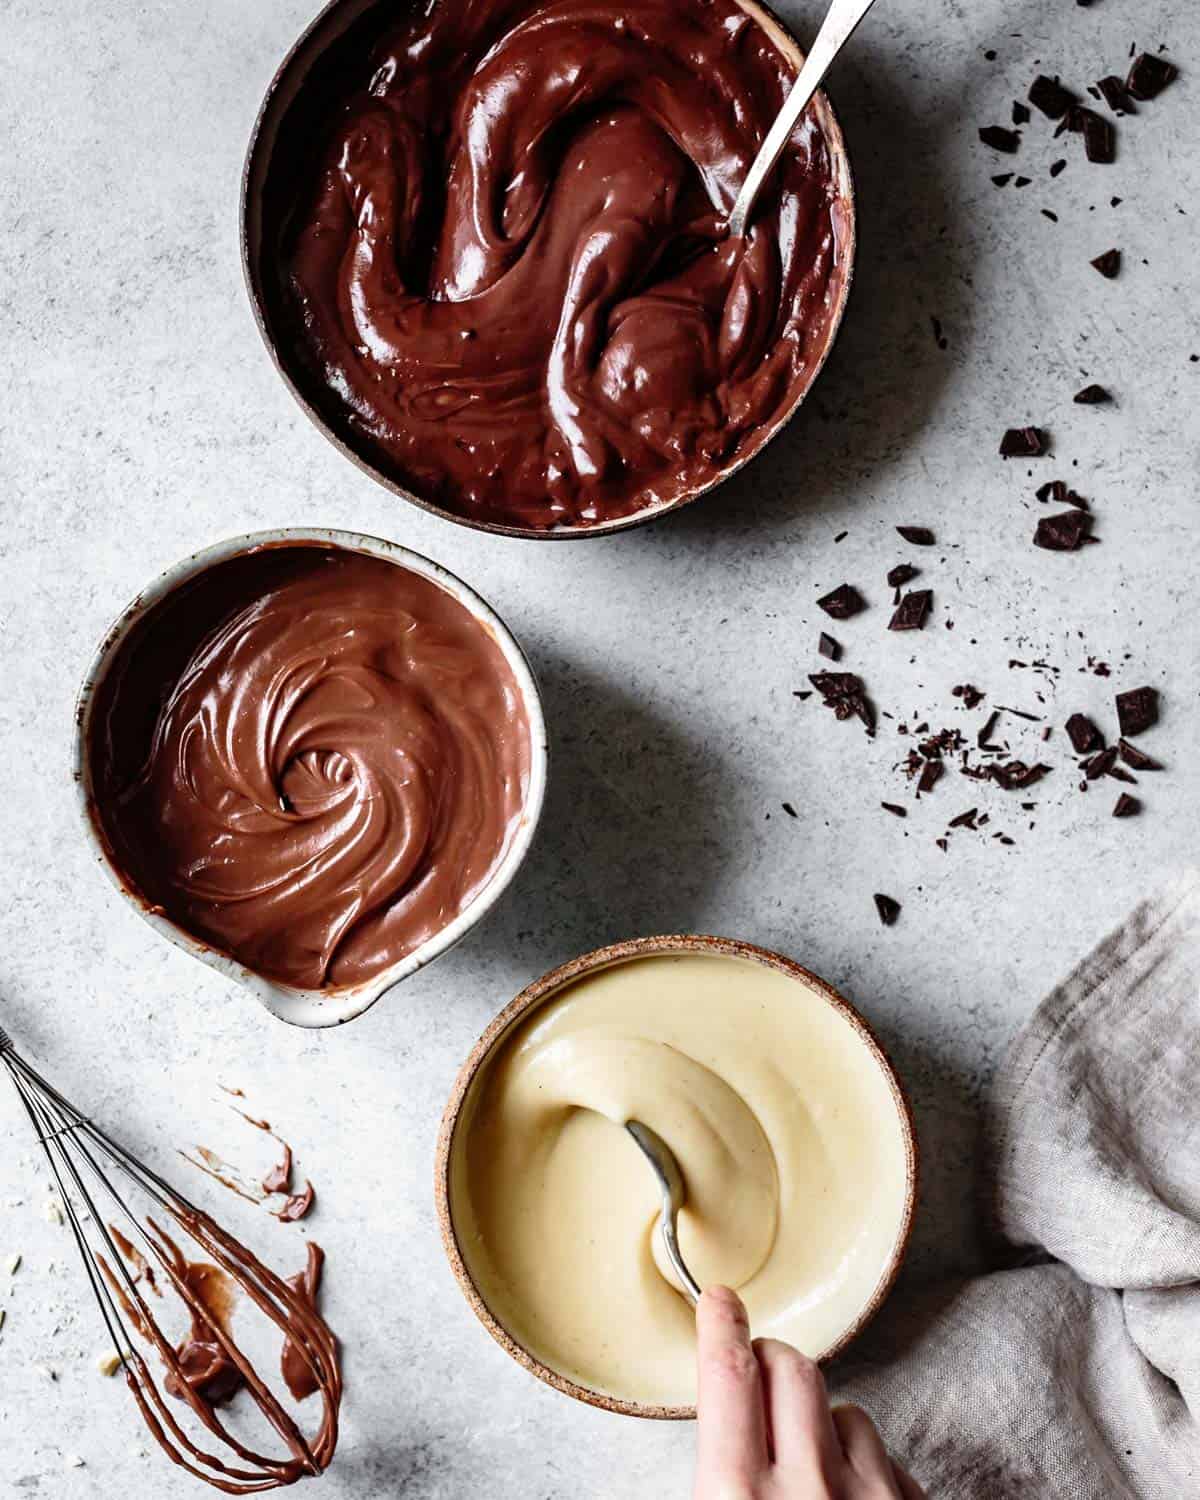 gluten-free chocolate recipes: 3 chocolate ganaches